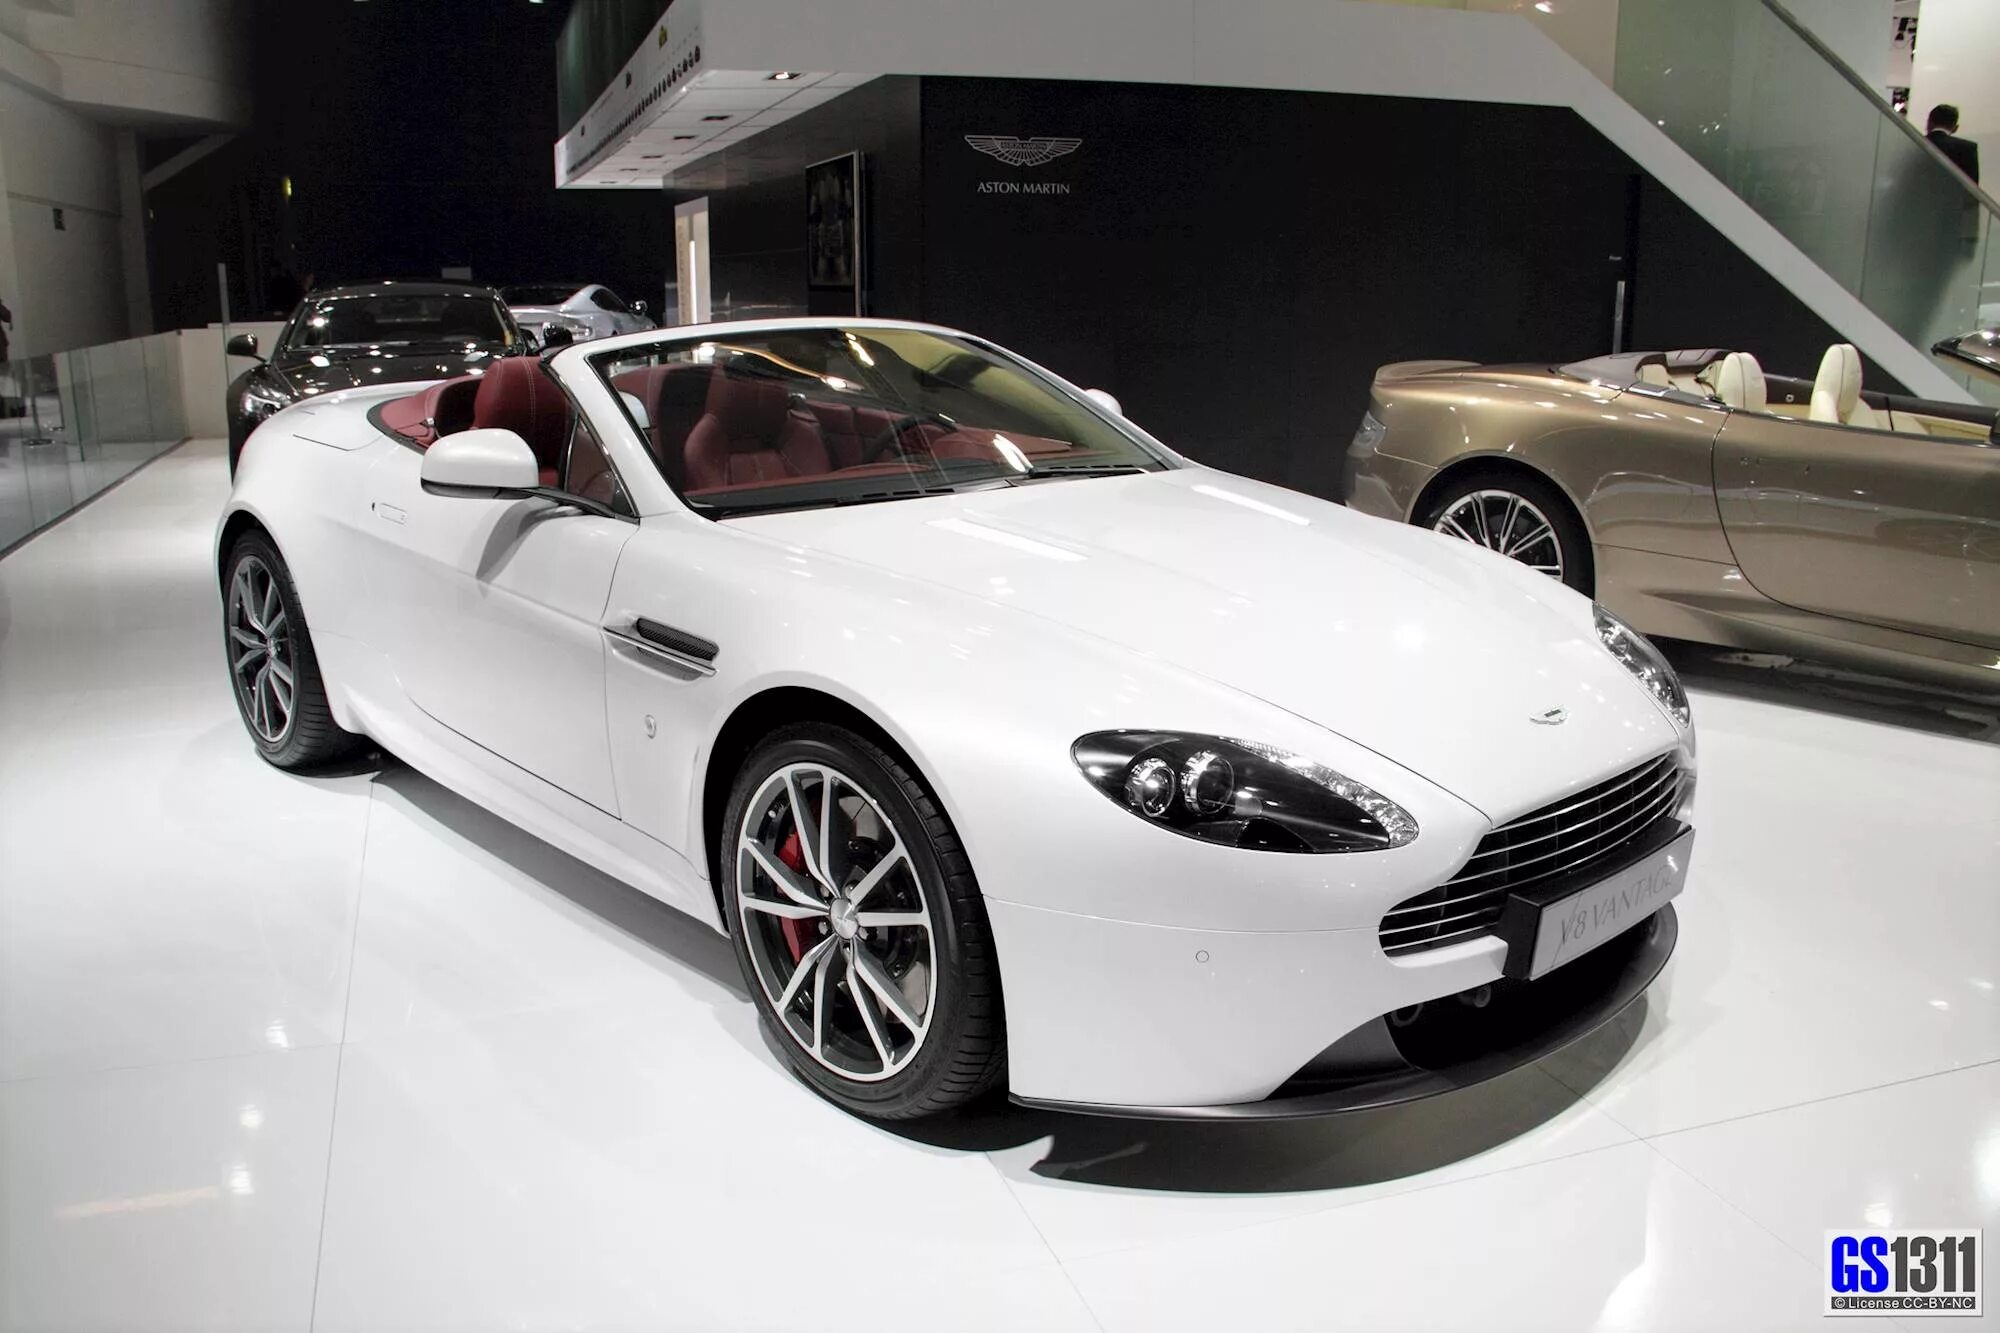 Автомобиль 1 млн руб. 2006 Aston Martin v8 Vantage White. Машины за 4 миллиона. Машина за миллион рублей.